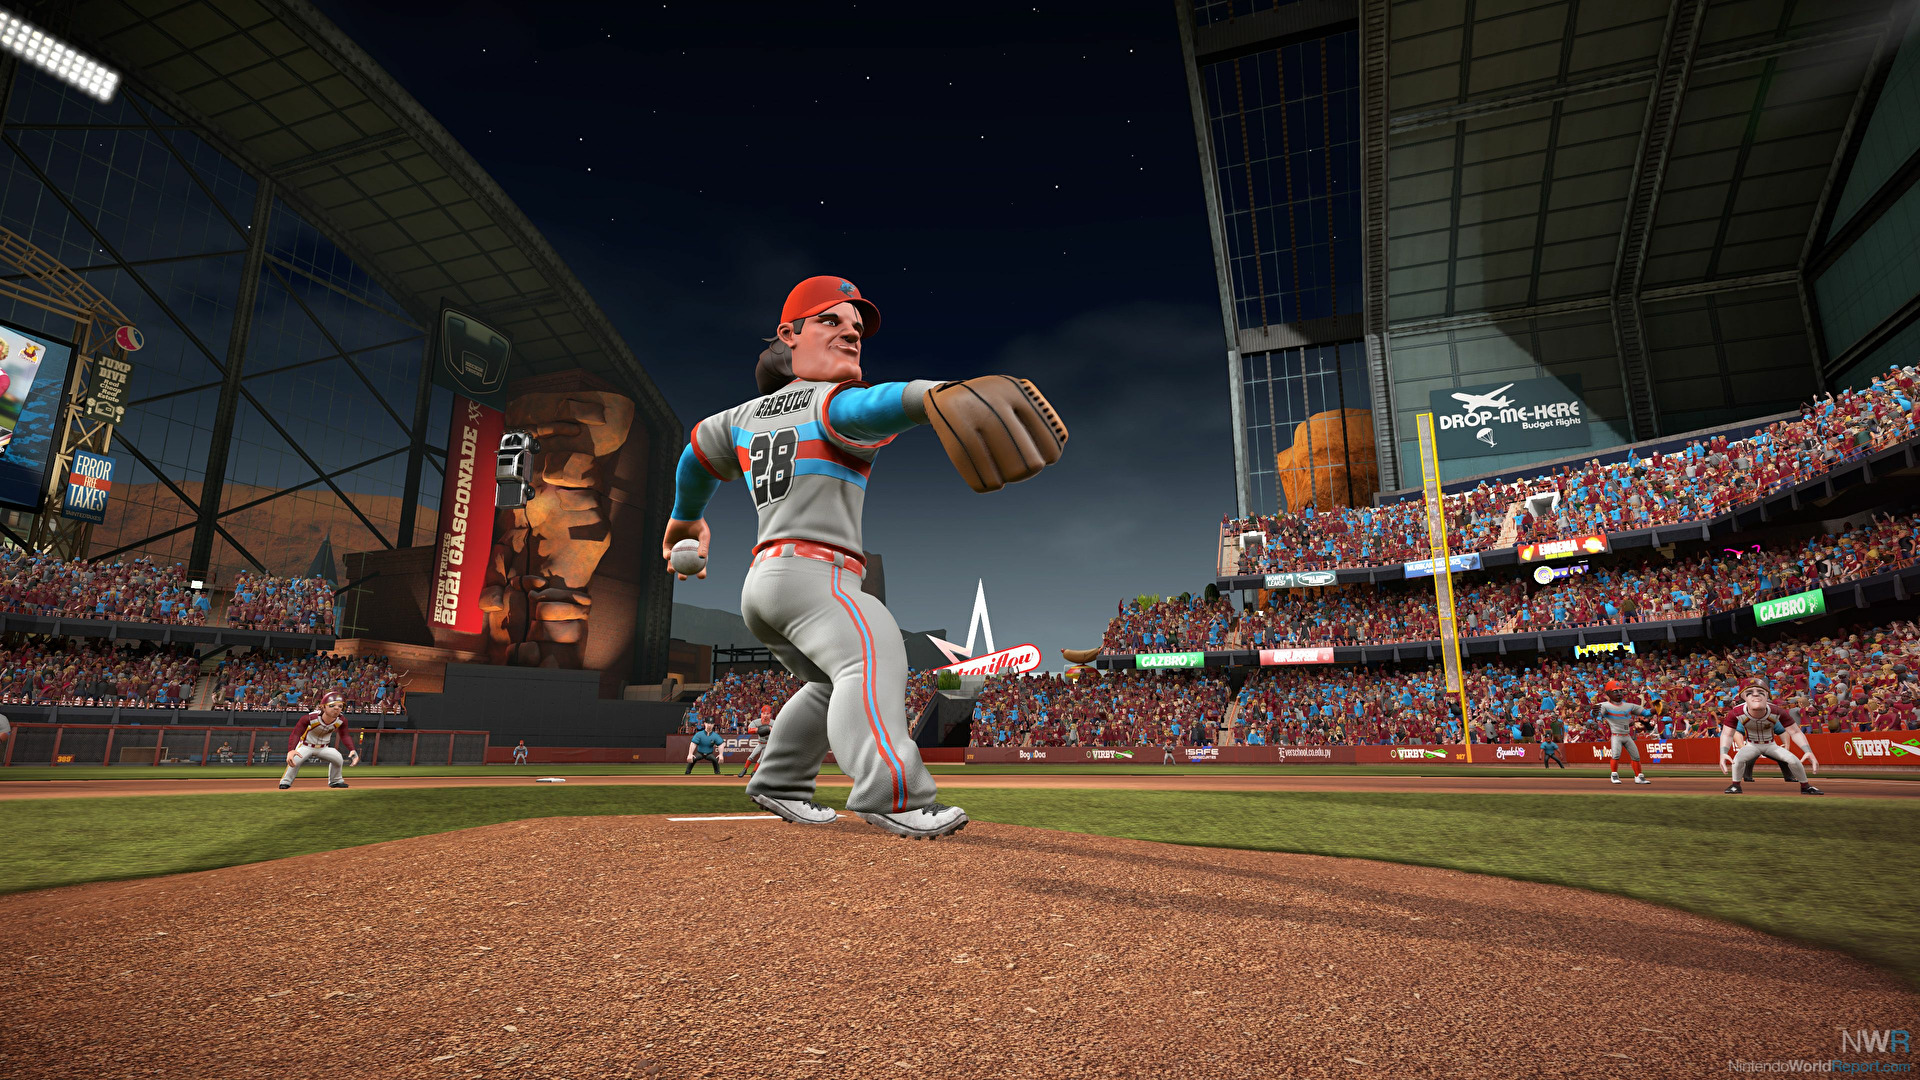 New Online Mode Coming to Super Mega Baseball 3 Next Week - News